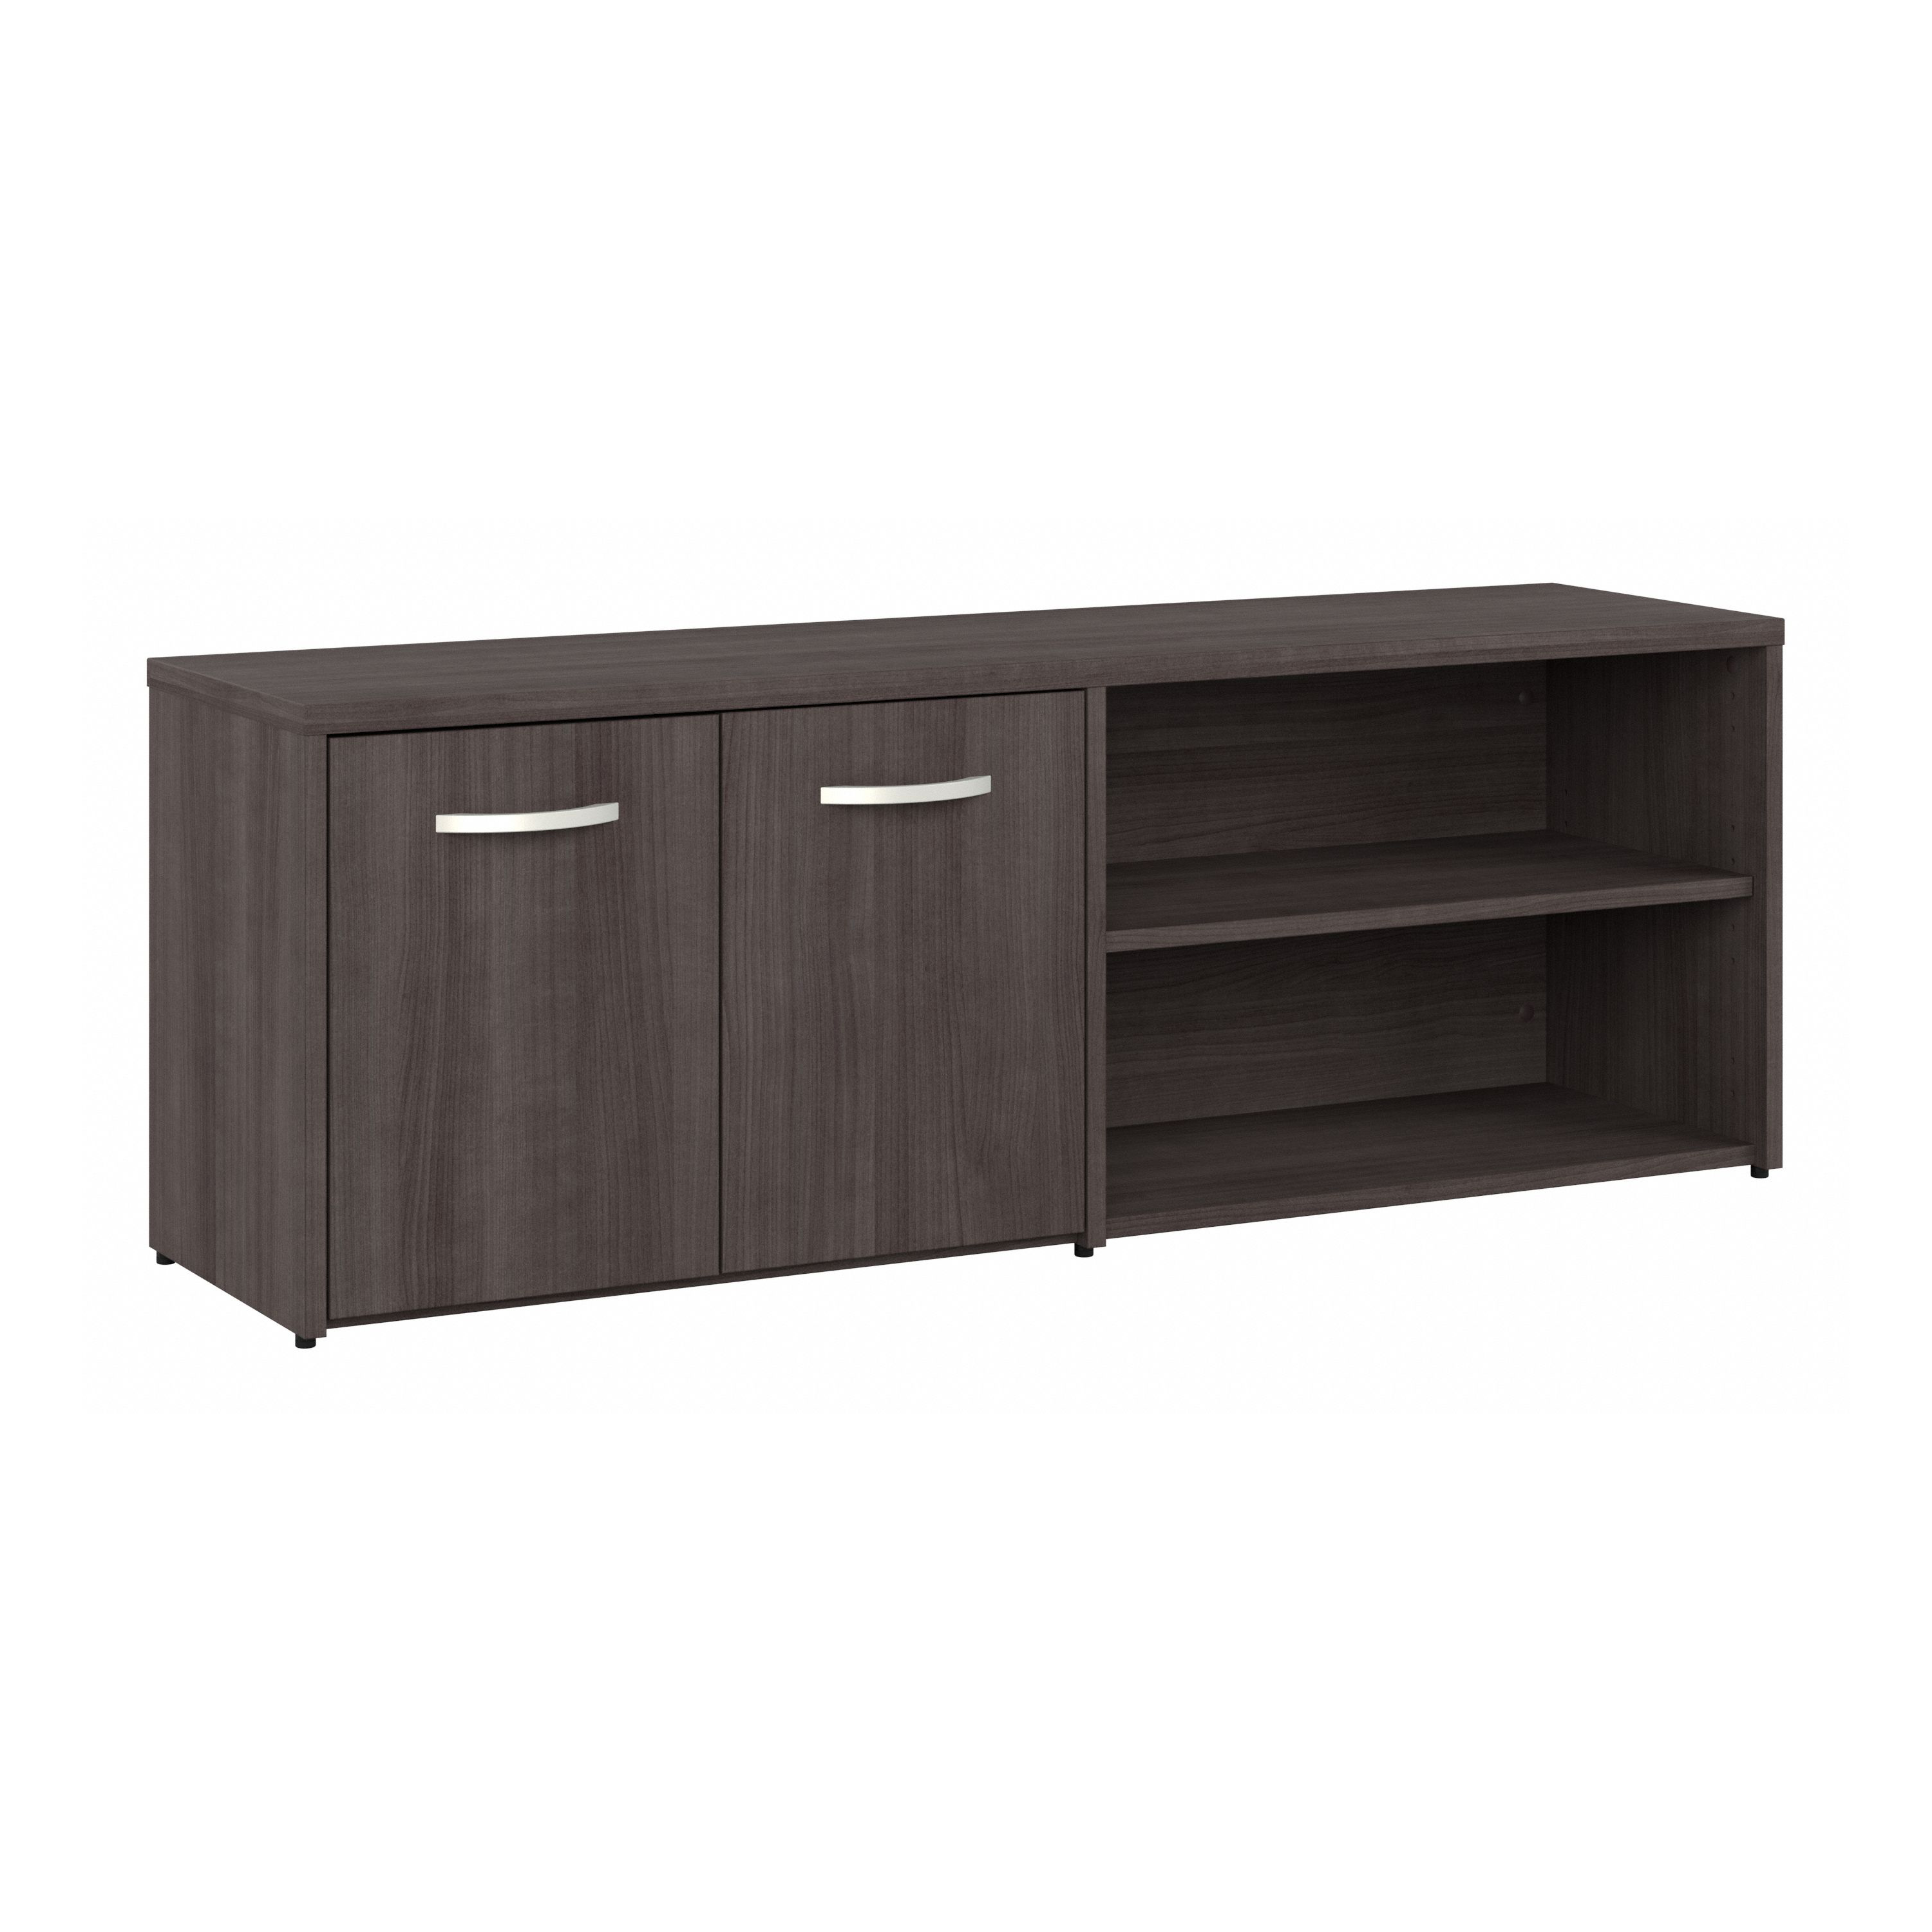 Shop Bush Business Furniture Studio A Low Storage Cabinet with Doors and Shelves 02 SDS160SG-Z #color_storm gray